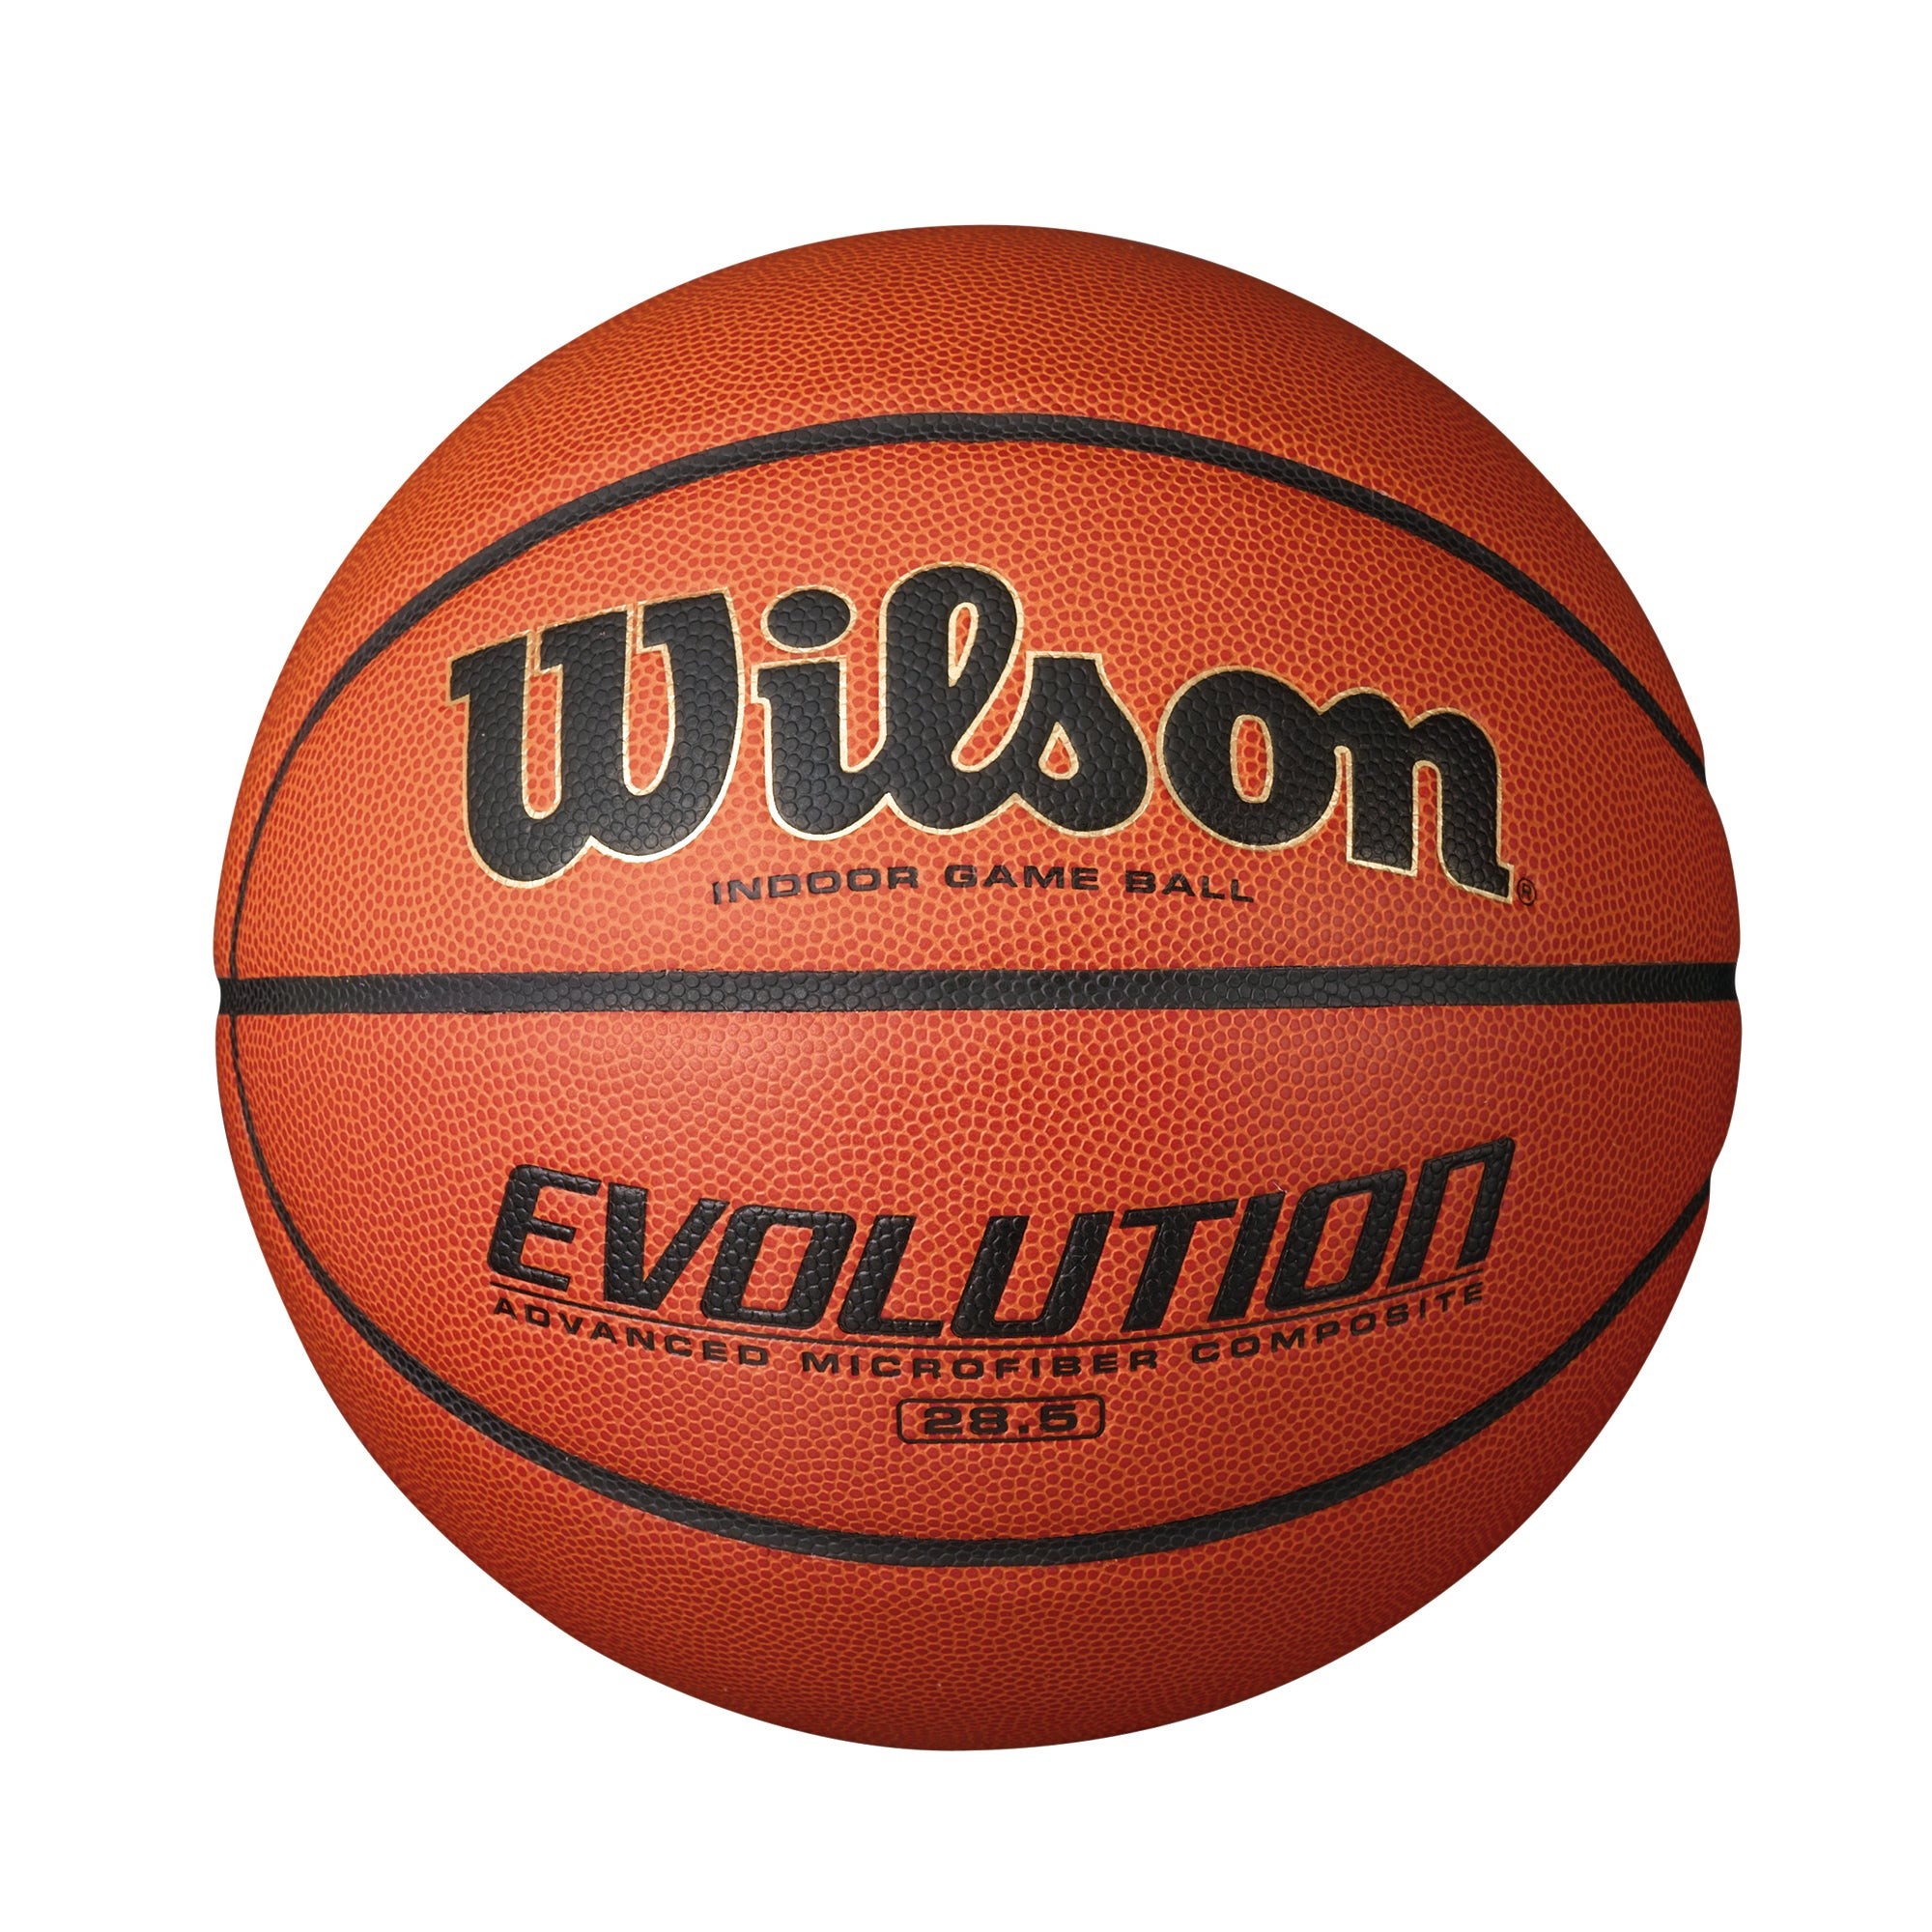 Evolution 28.5" Intermediate Game Basketball